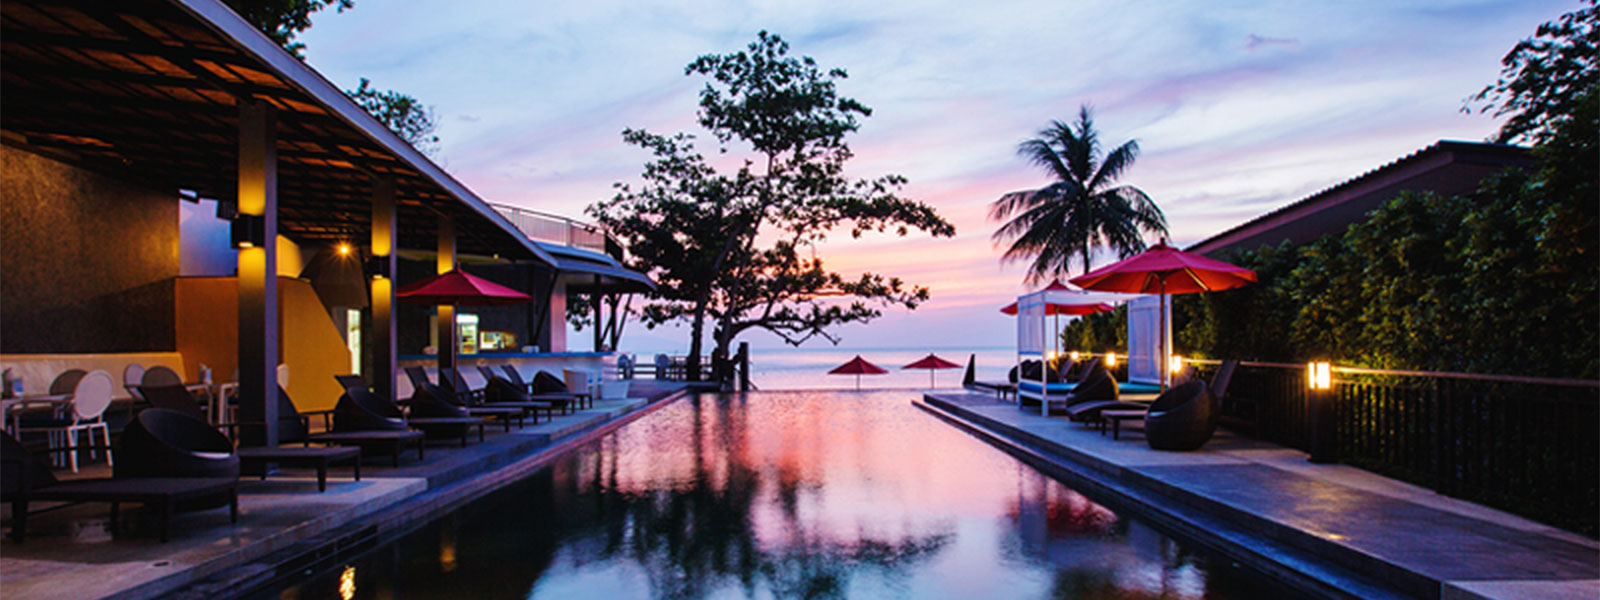 Home-sunset-beach-club-hotel